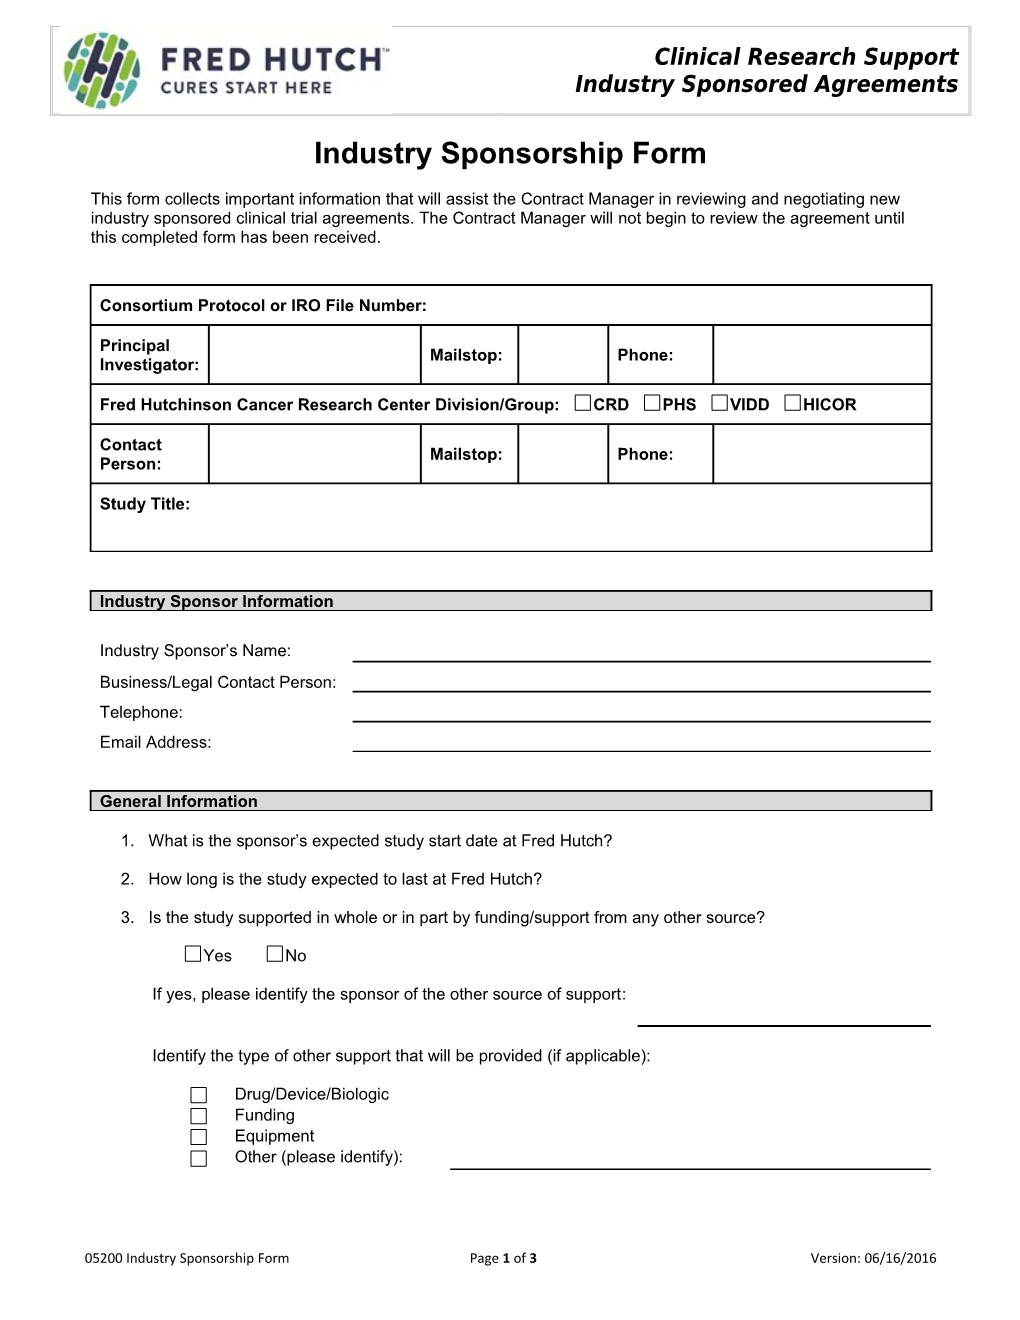 Industry Sponsorship Form